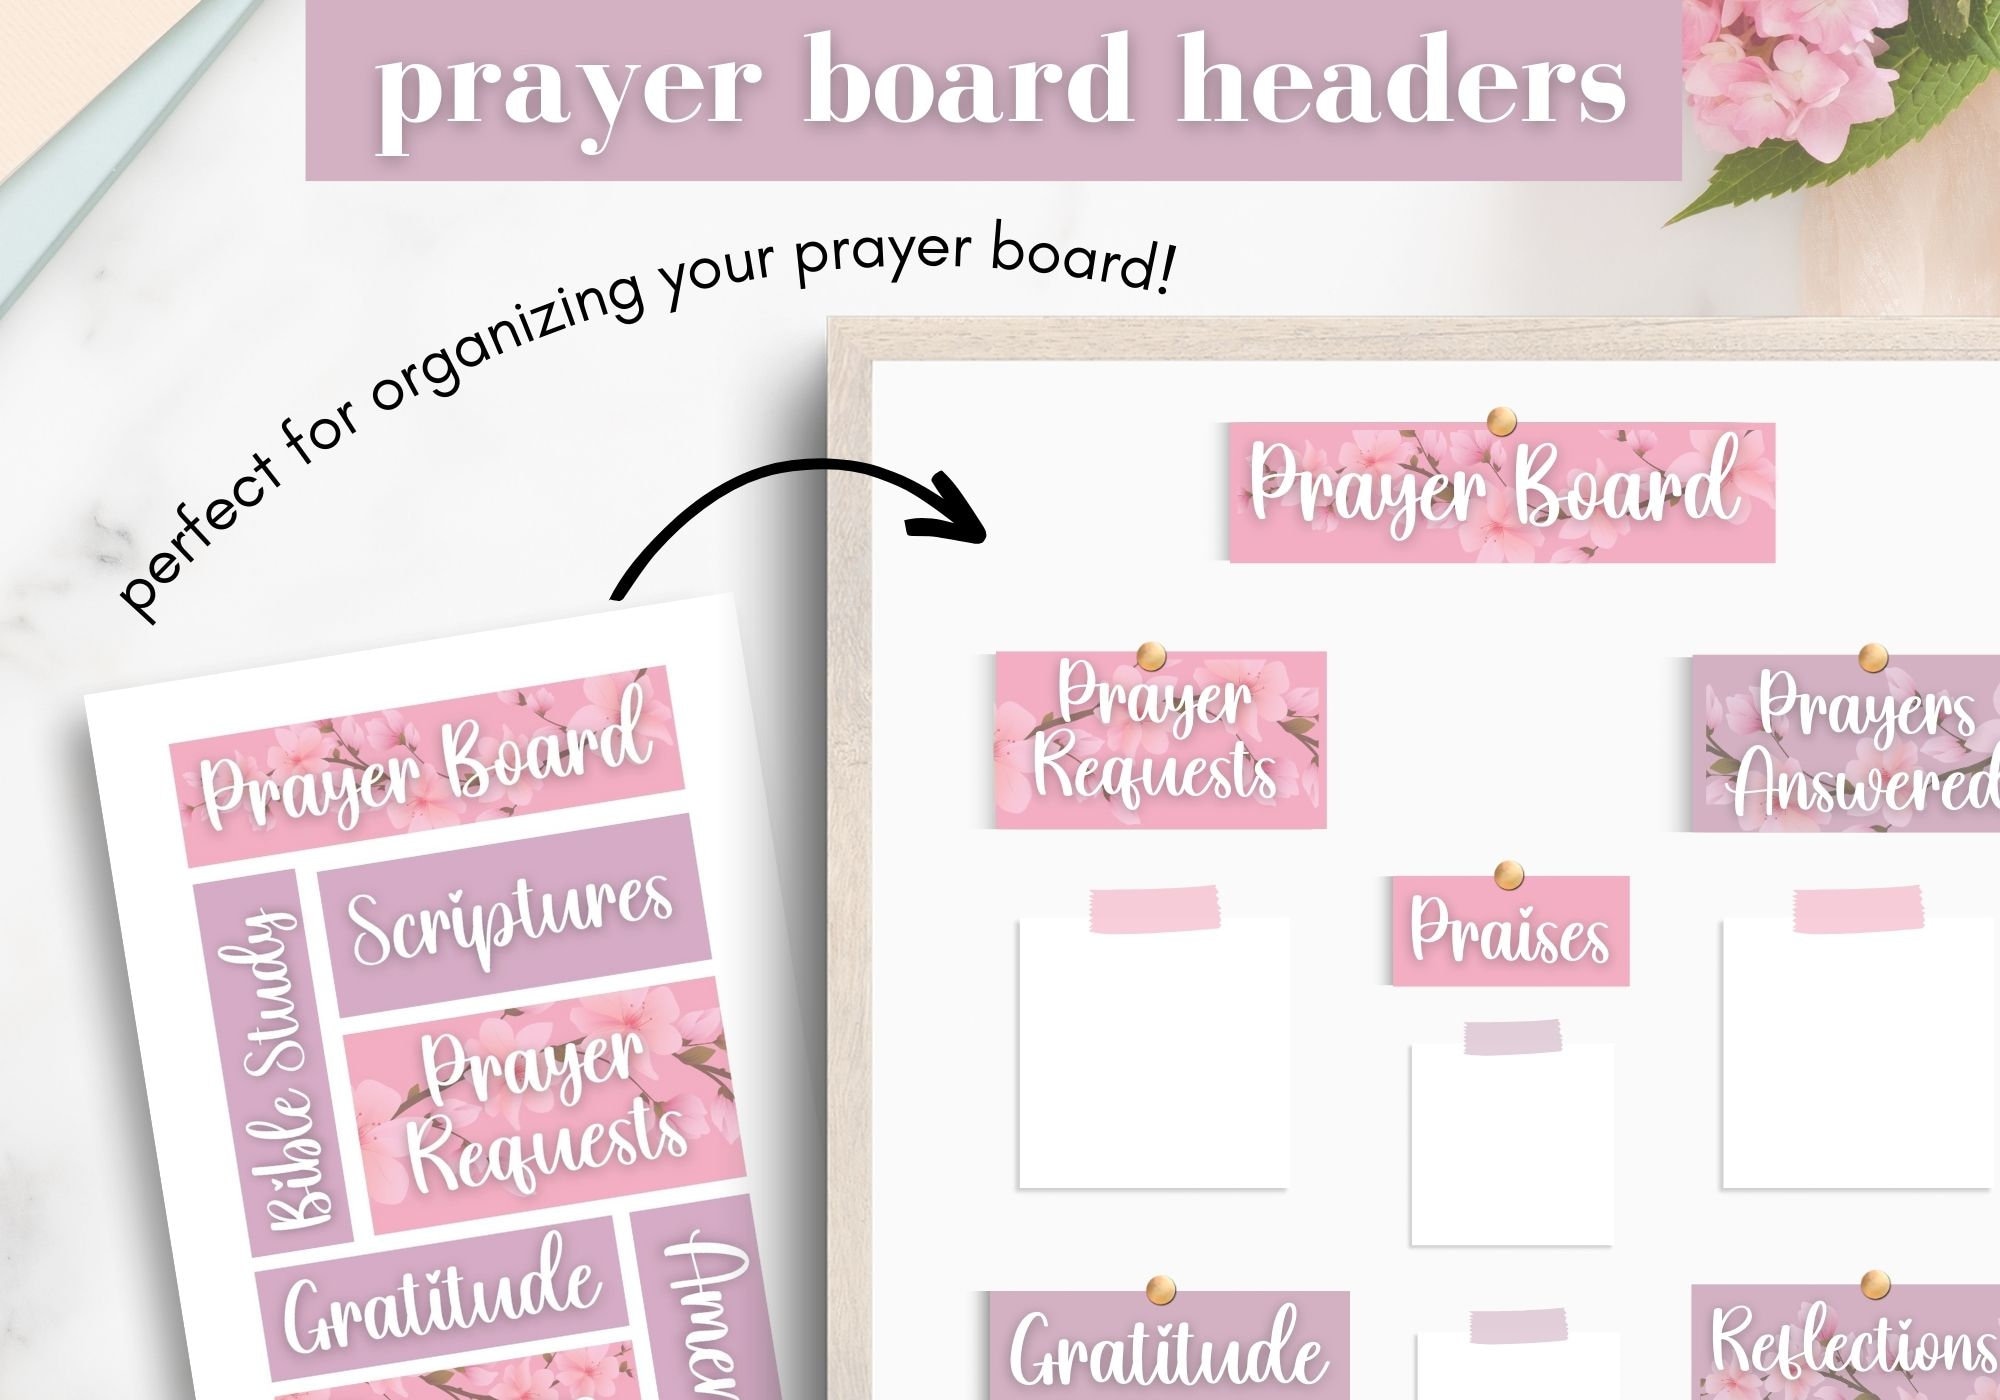 Printable Prayer Board Kit, Vintage Floral Prayer Board, Prayer Cards,  Bible Verses, Scripture on Prayer Enhance Your Prayer Life 